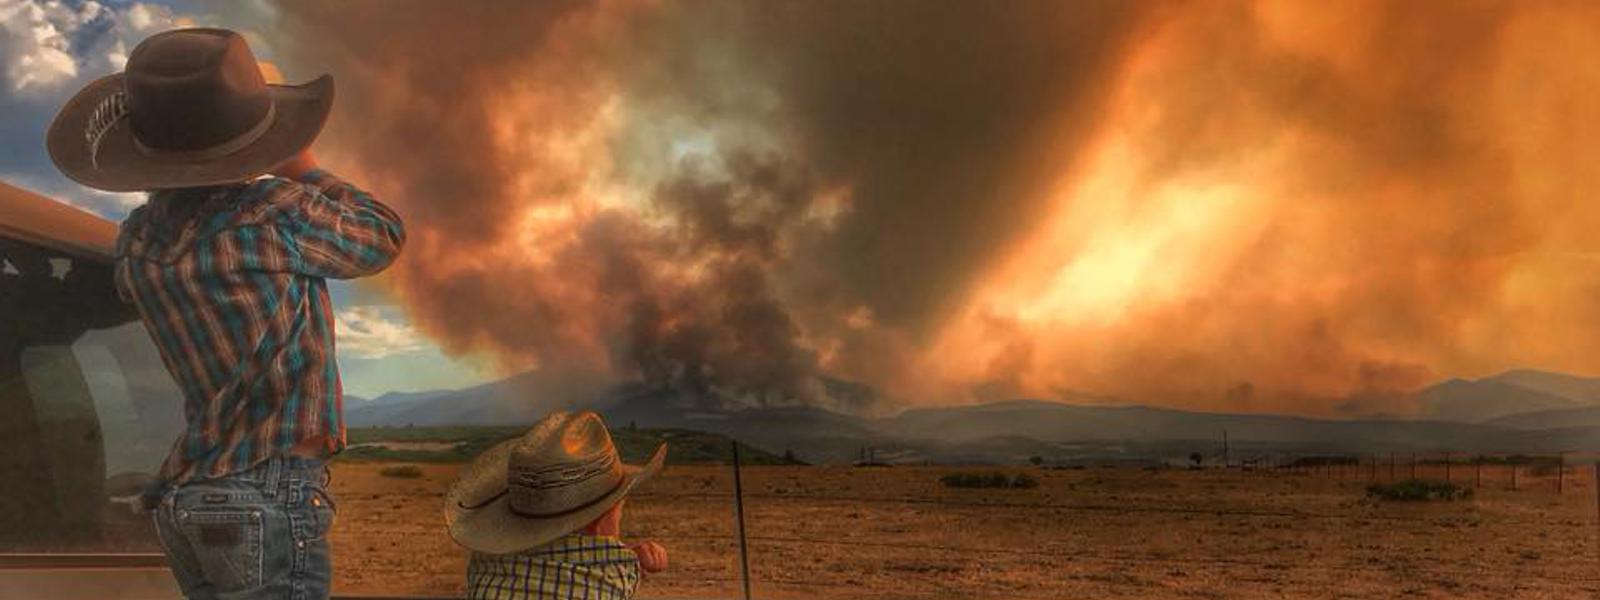 Fire Mitigation by Wayne Arnold in La Veta and Huerfano County